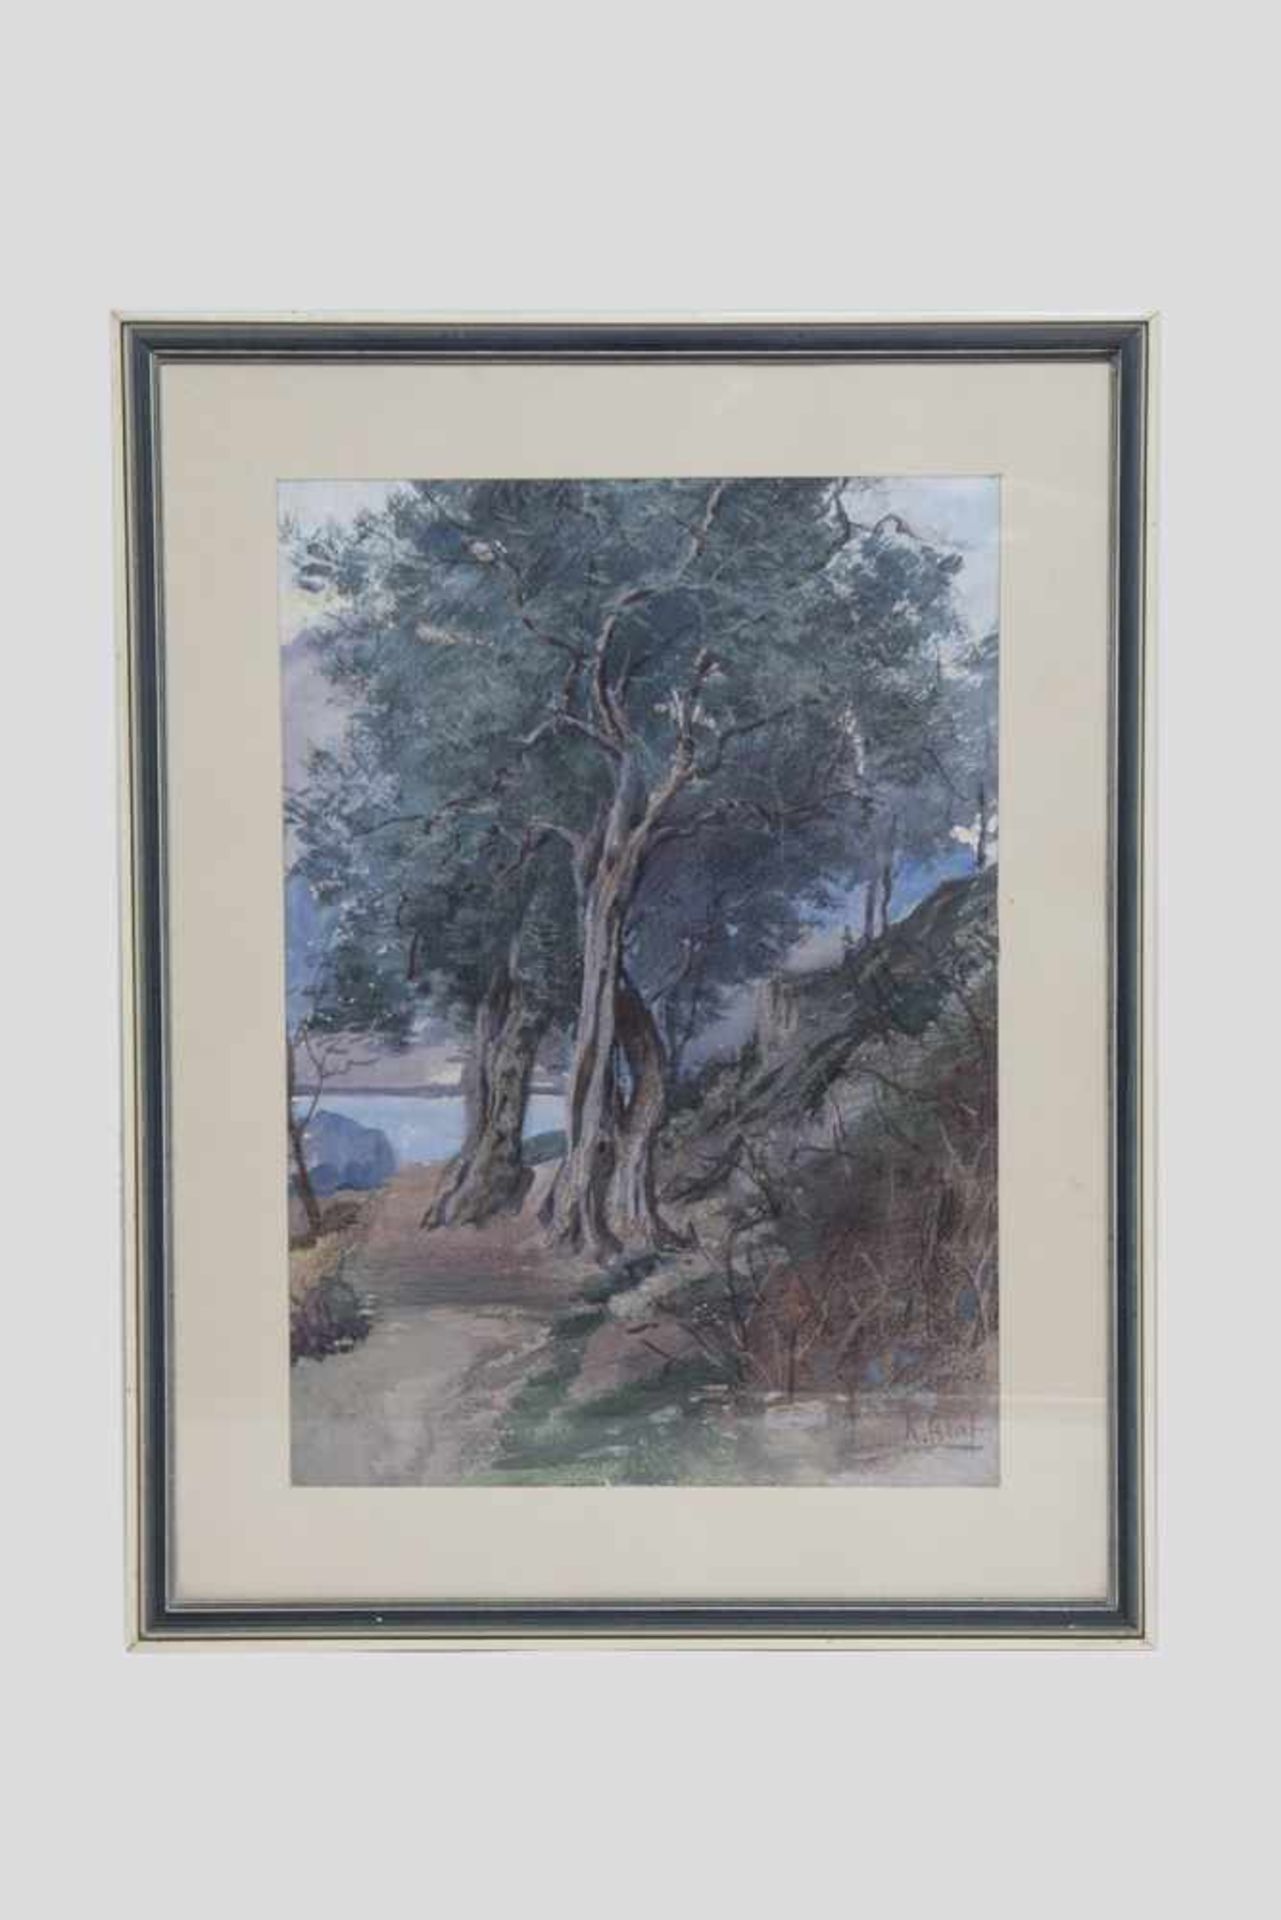 Karl Graf (Horn 1859-1925 Wr.Neustadt) Bäume, Aquarell, signiert K.Graf, 36x26 cm, in